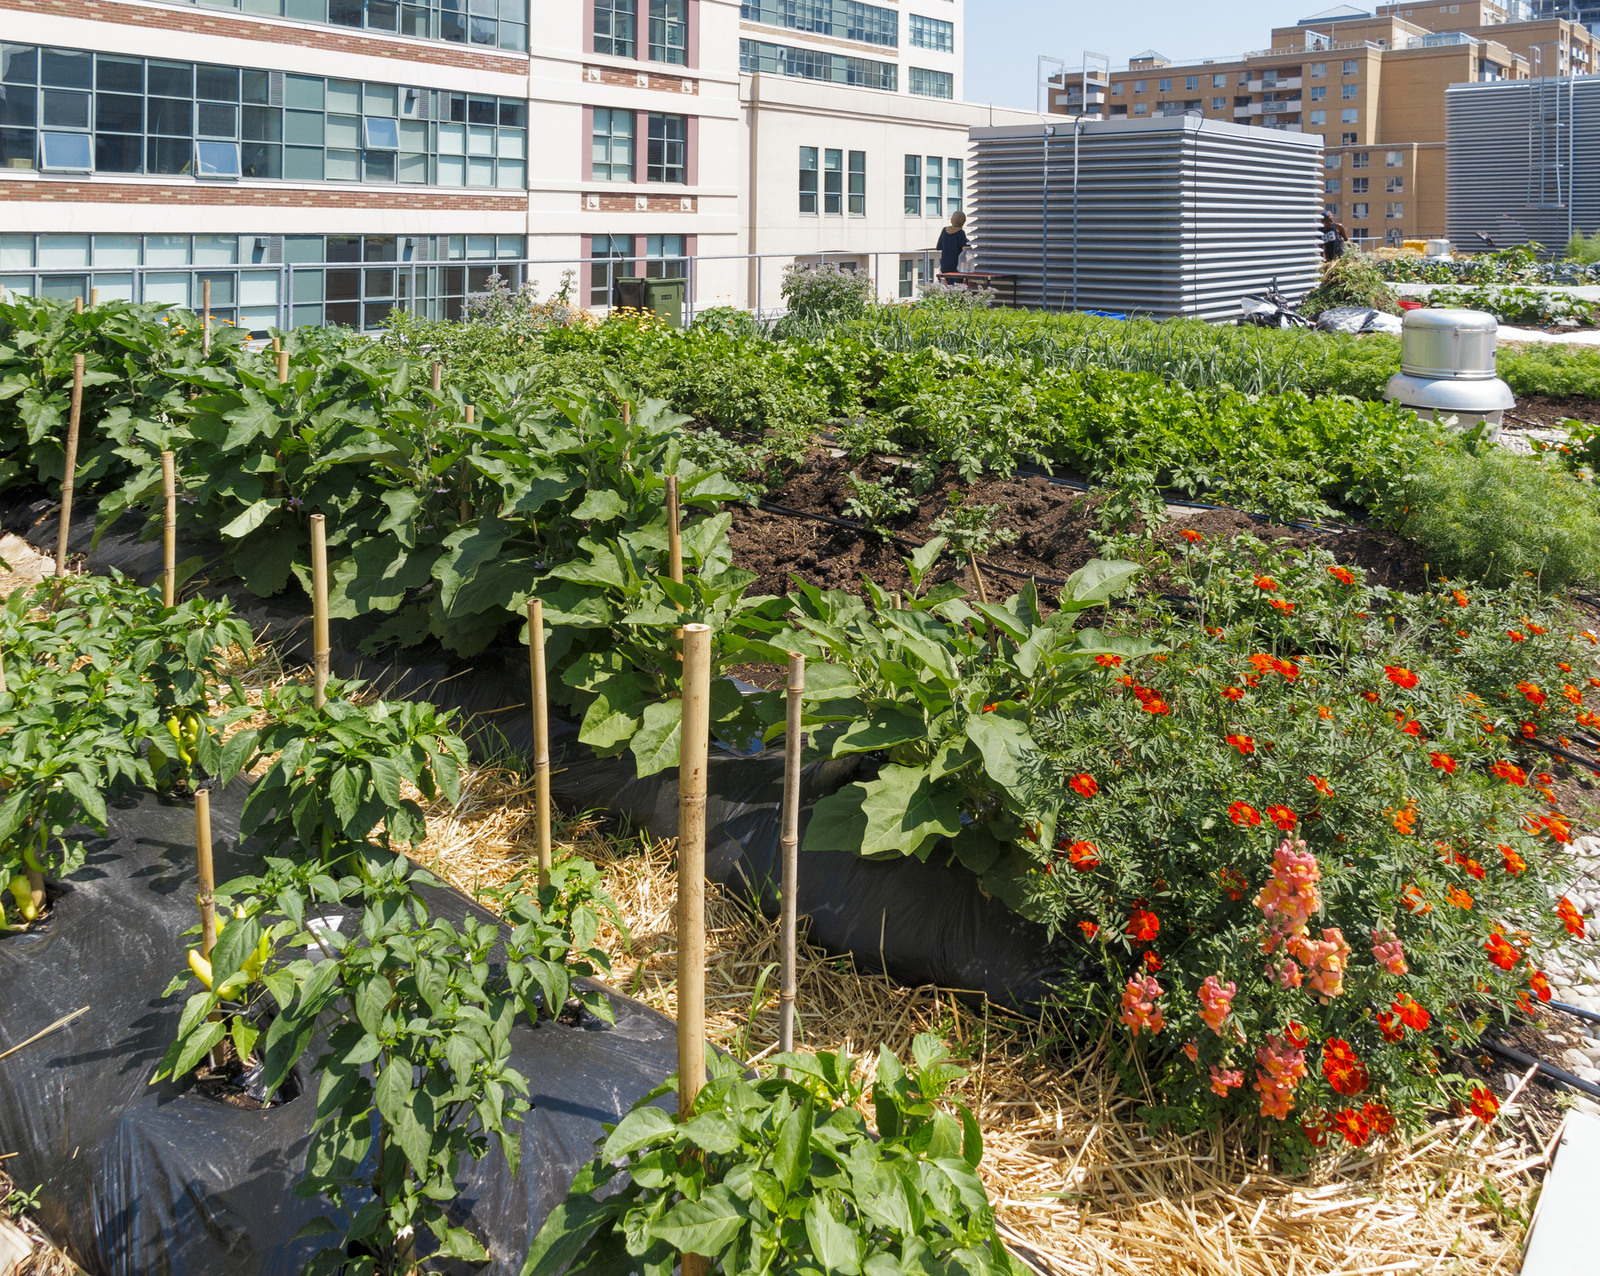 Growing vegetables on roof of urban building. Image Credit: © Alisonh29 | Dreamstime.com.